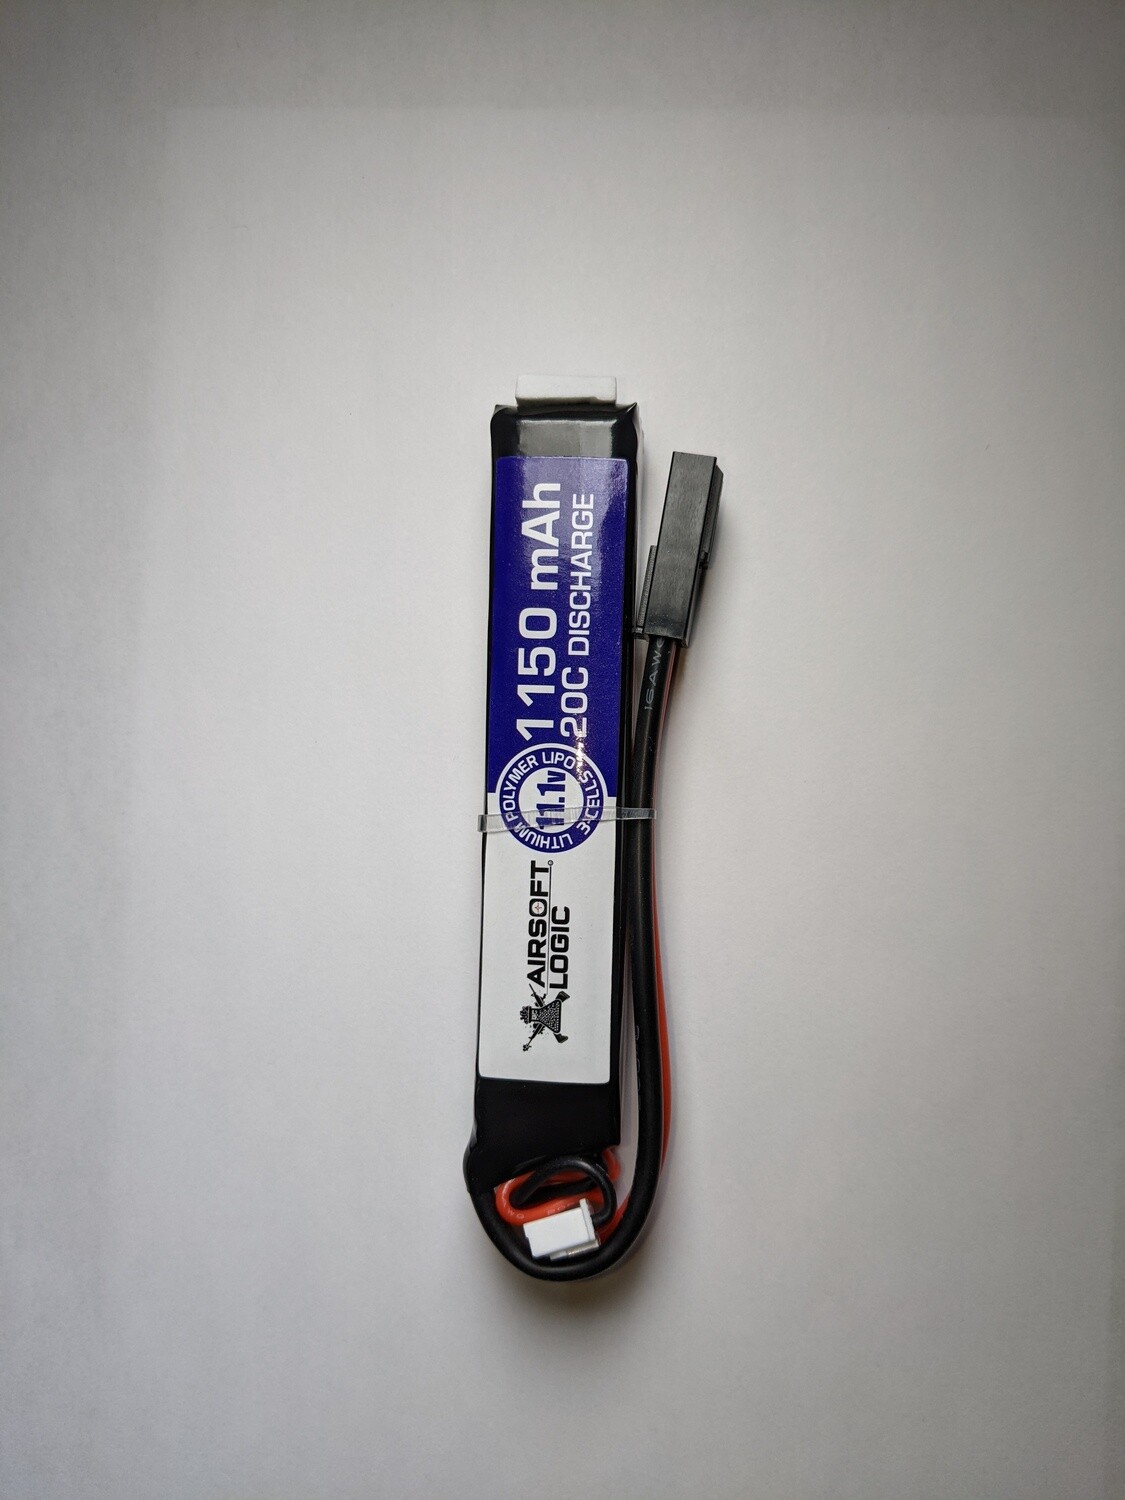 Airsoft Logic 11.1V 1150mAh Ultra Compact Stick Lipo